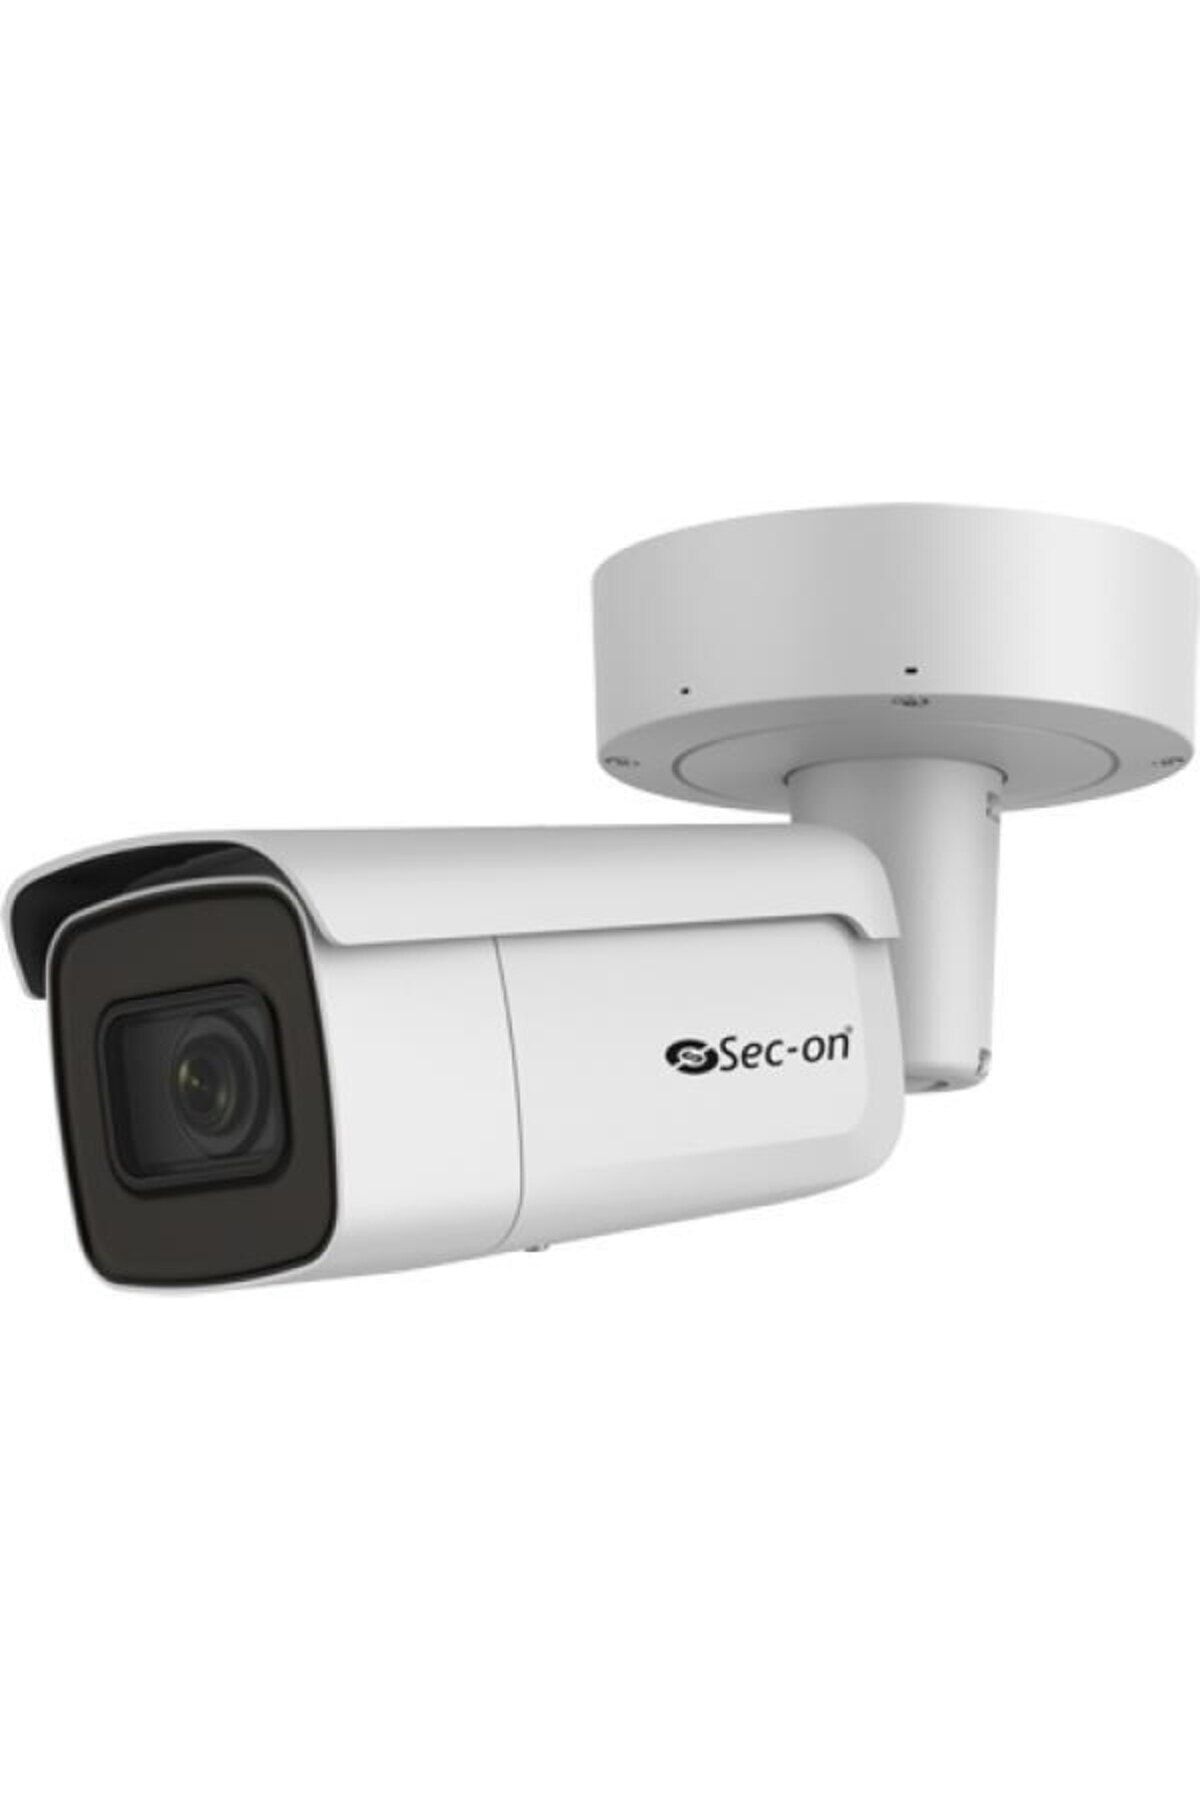 Sec on SEC-ON SC-BM5302-S 5MP IP Bullet Network Güvenlik Kamerası